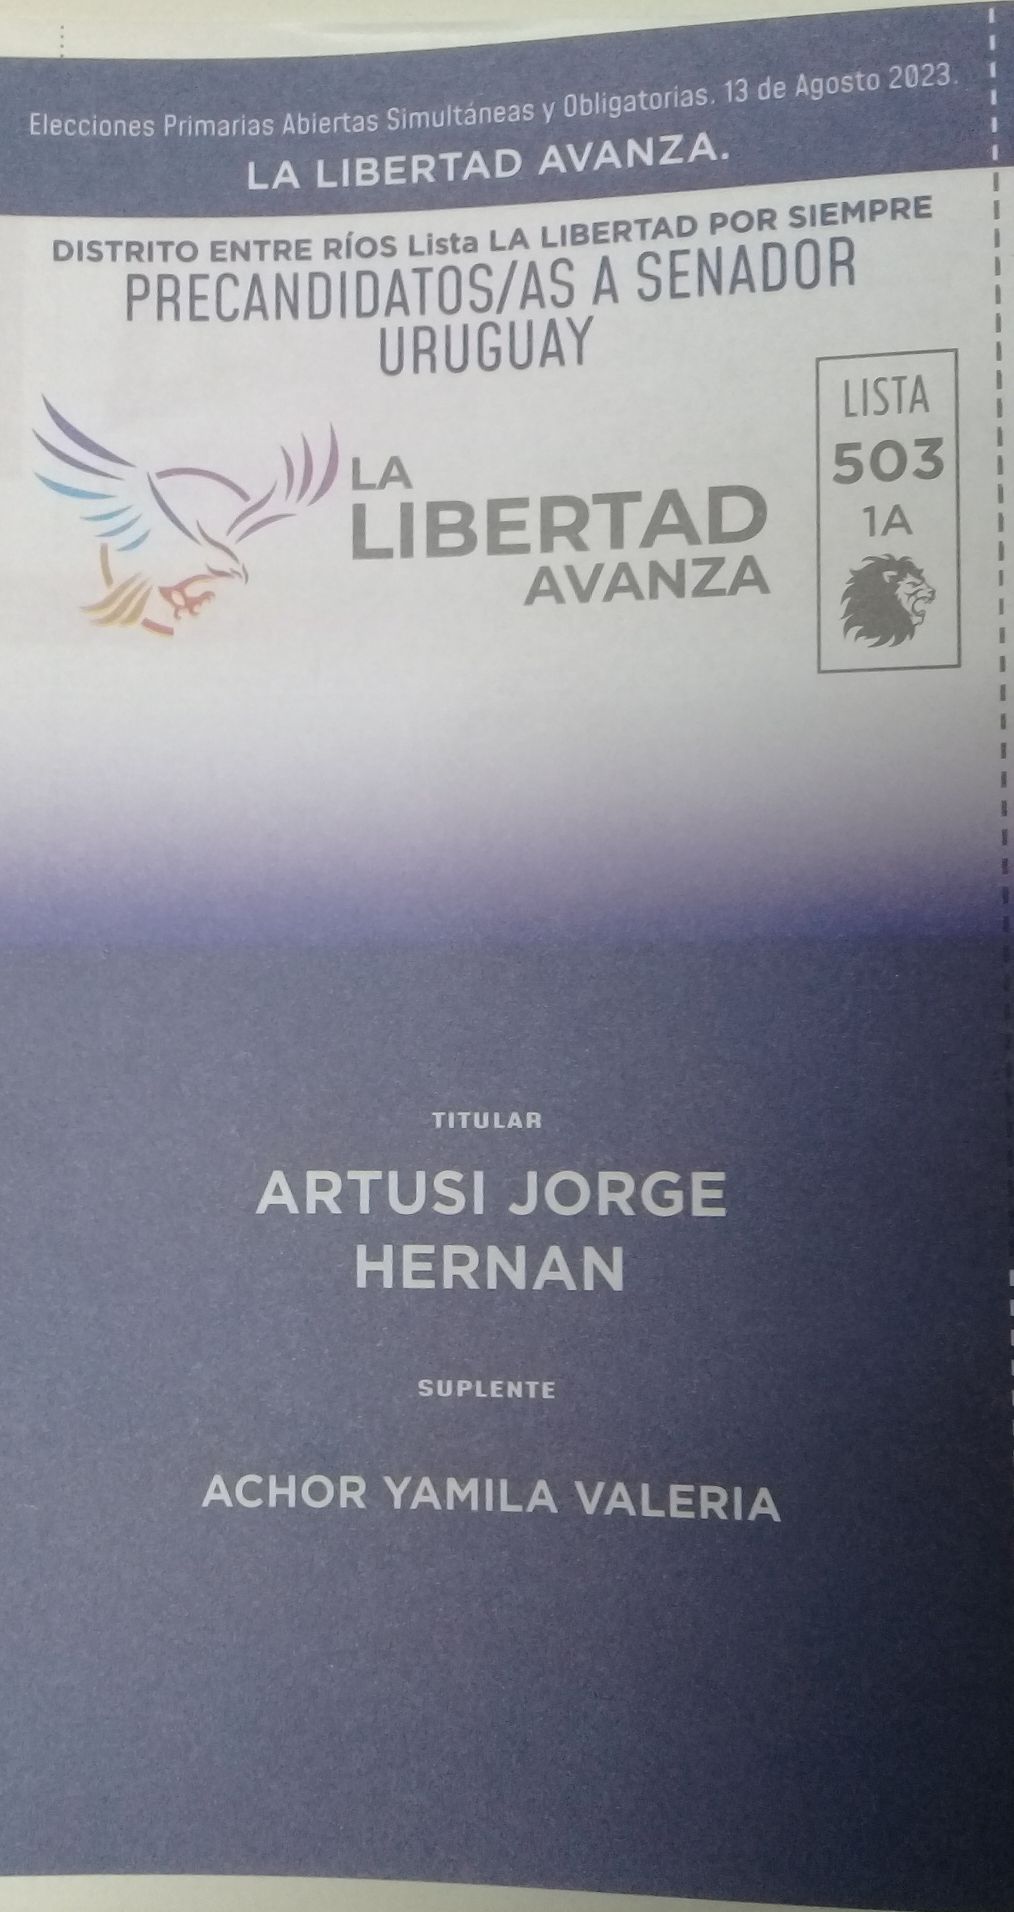 Lista 503, La Libertad Avanza, encabezada por Jorge Hernán Artusi.